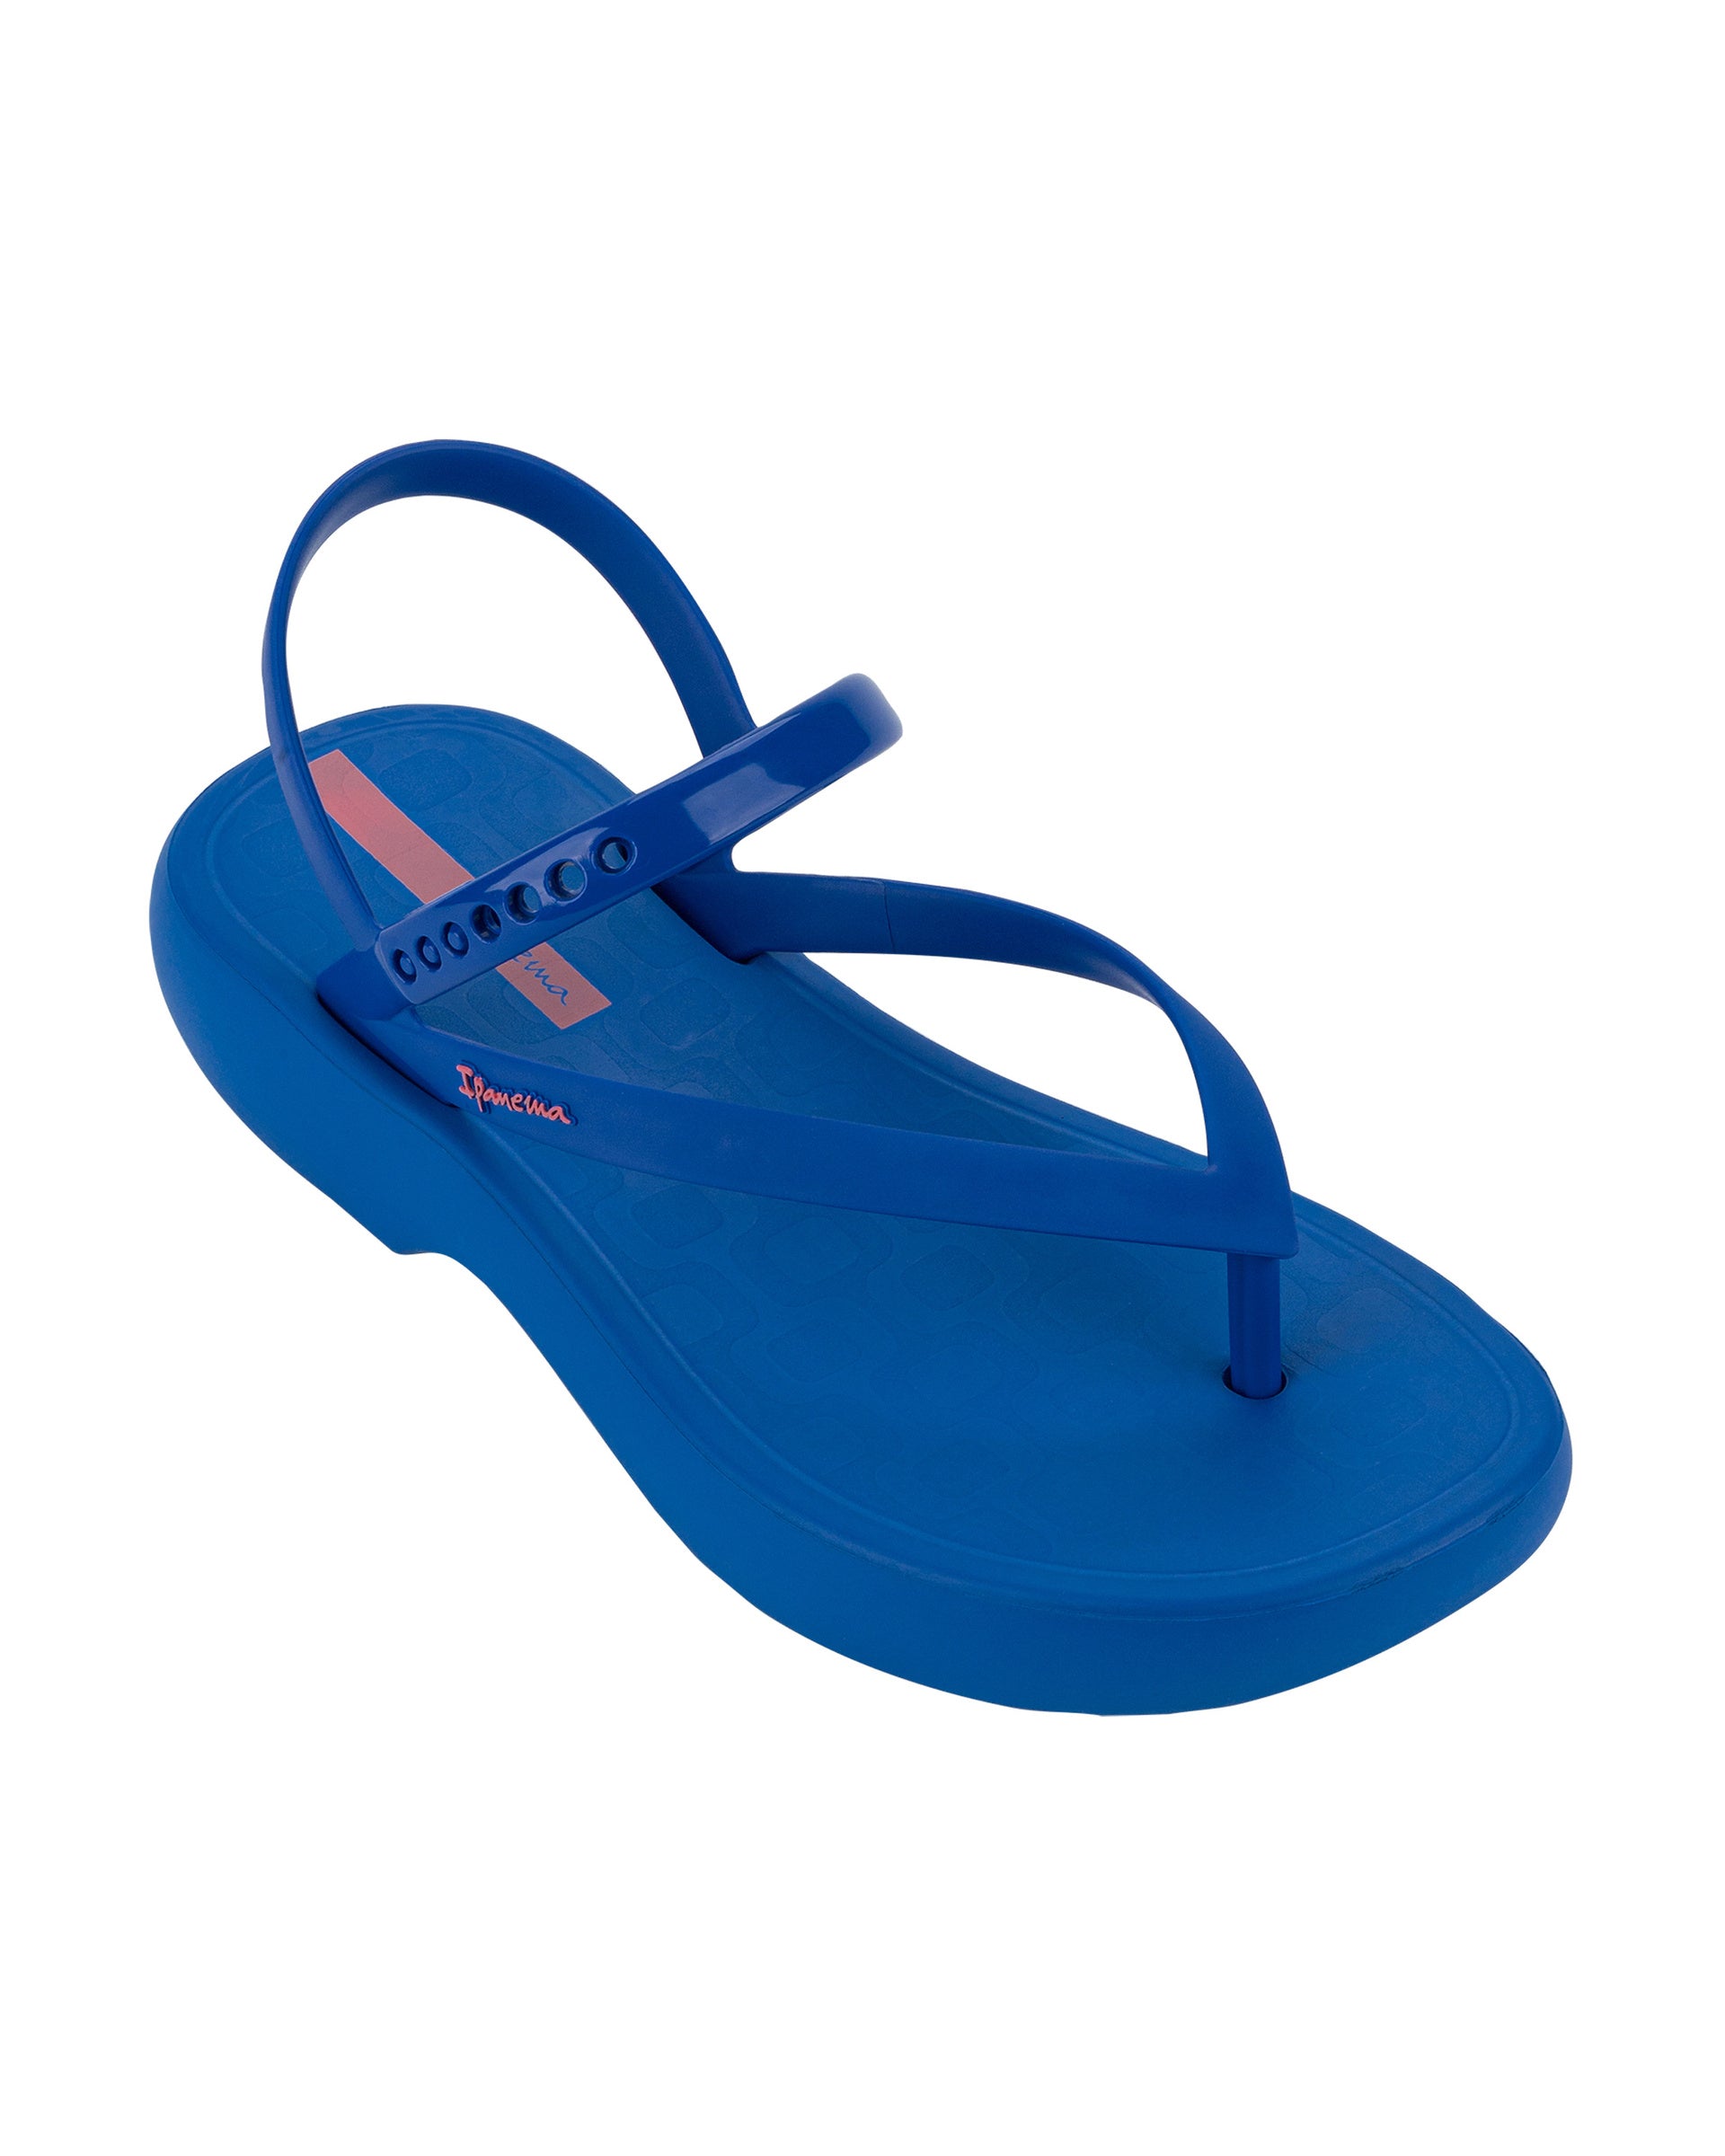 Angled view of a blue Ipanema Verano women's sandal.